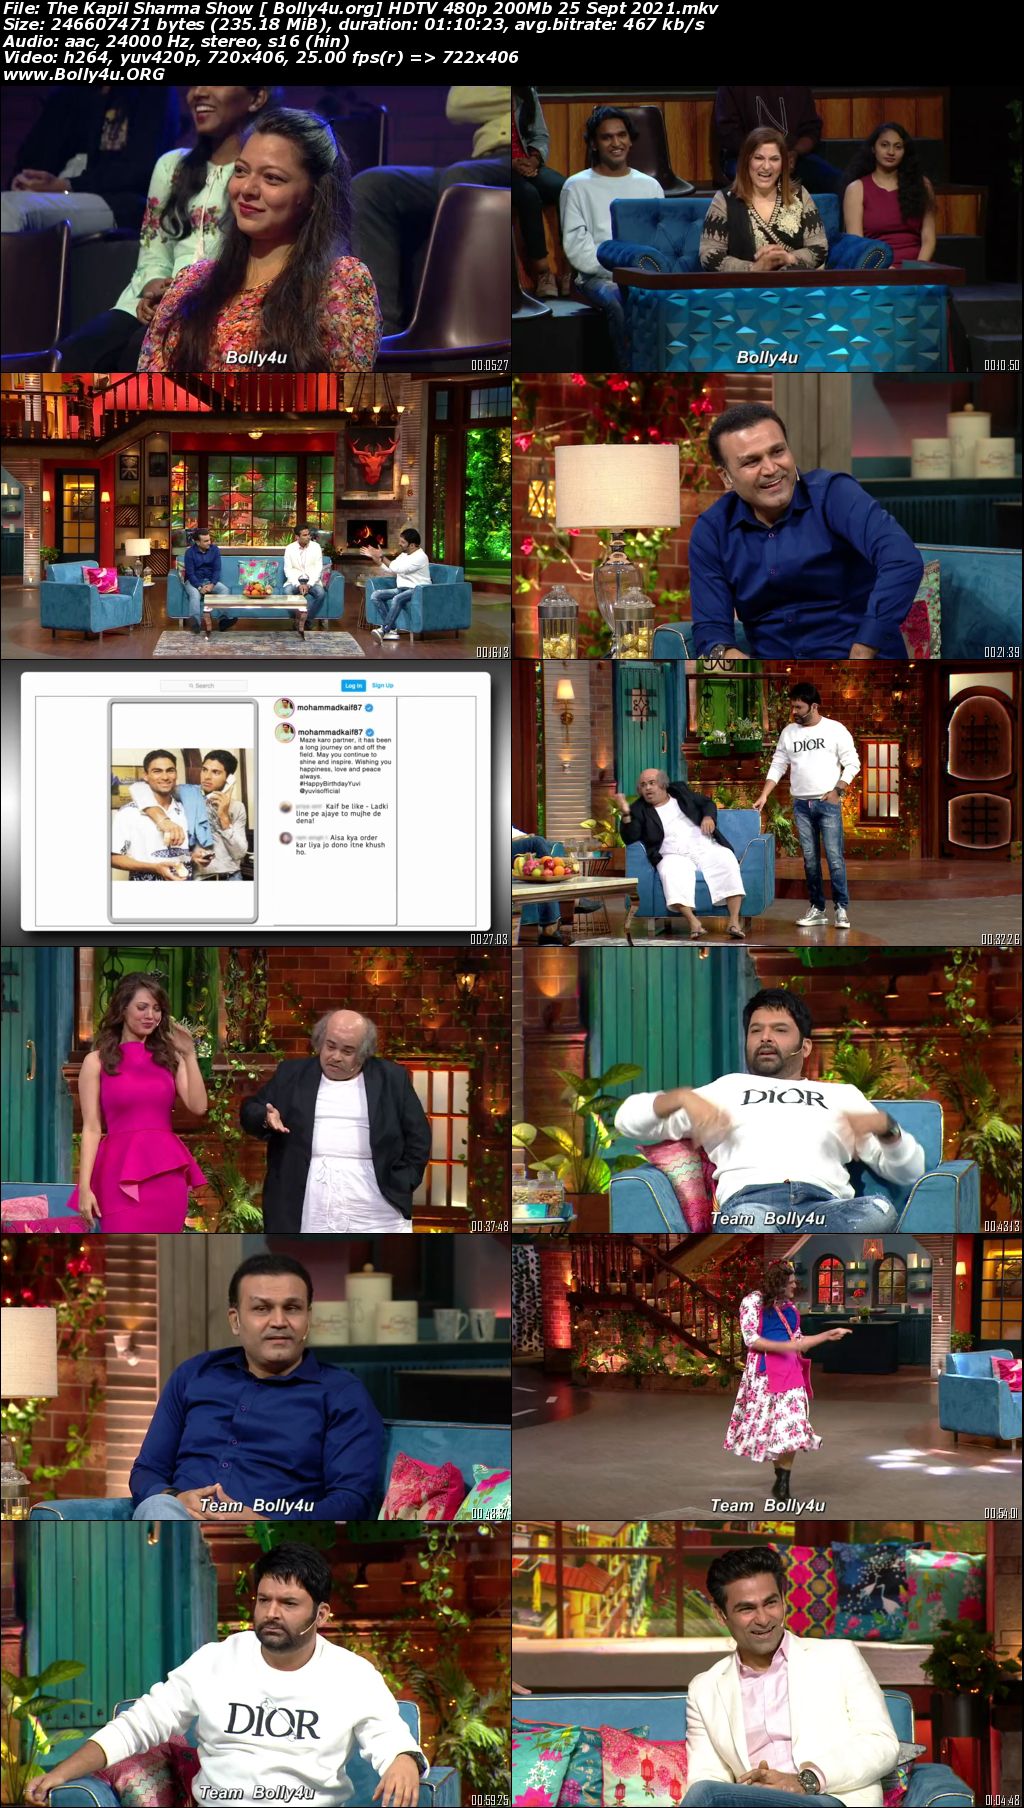 The Kapil Sharma Show HDTV 480p 200Mb 25 Sept 2021 Download